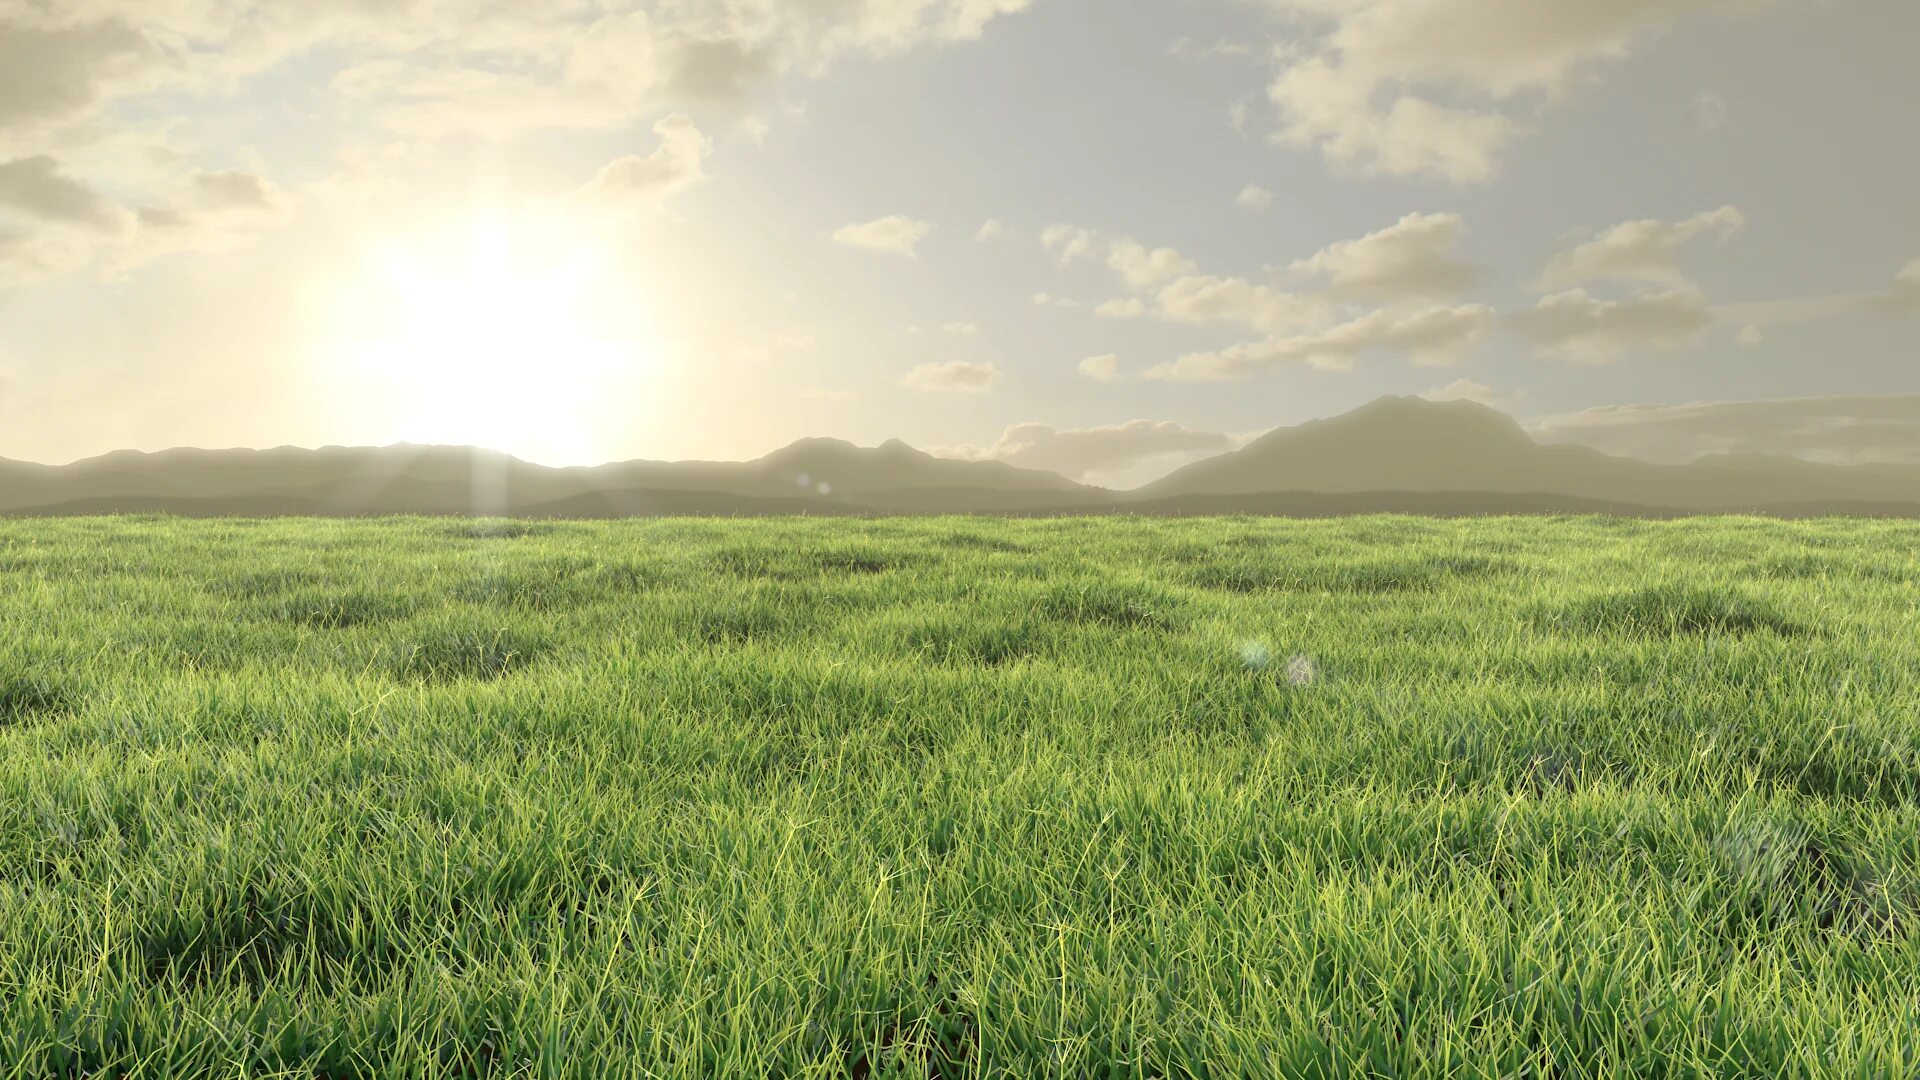 True fields. Травянистые равнины. Трава и небо. Равнина с травой. Равнина без травы.